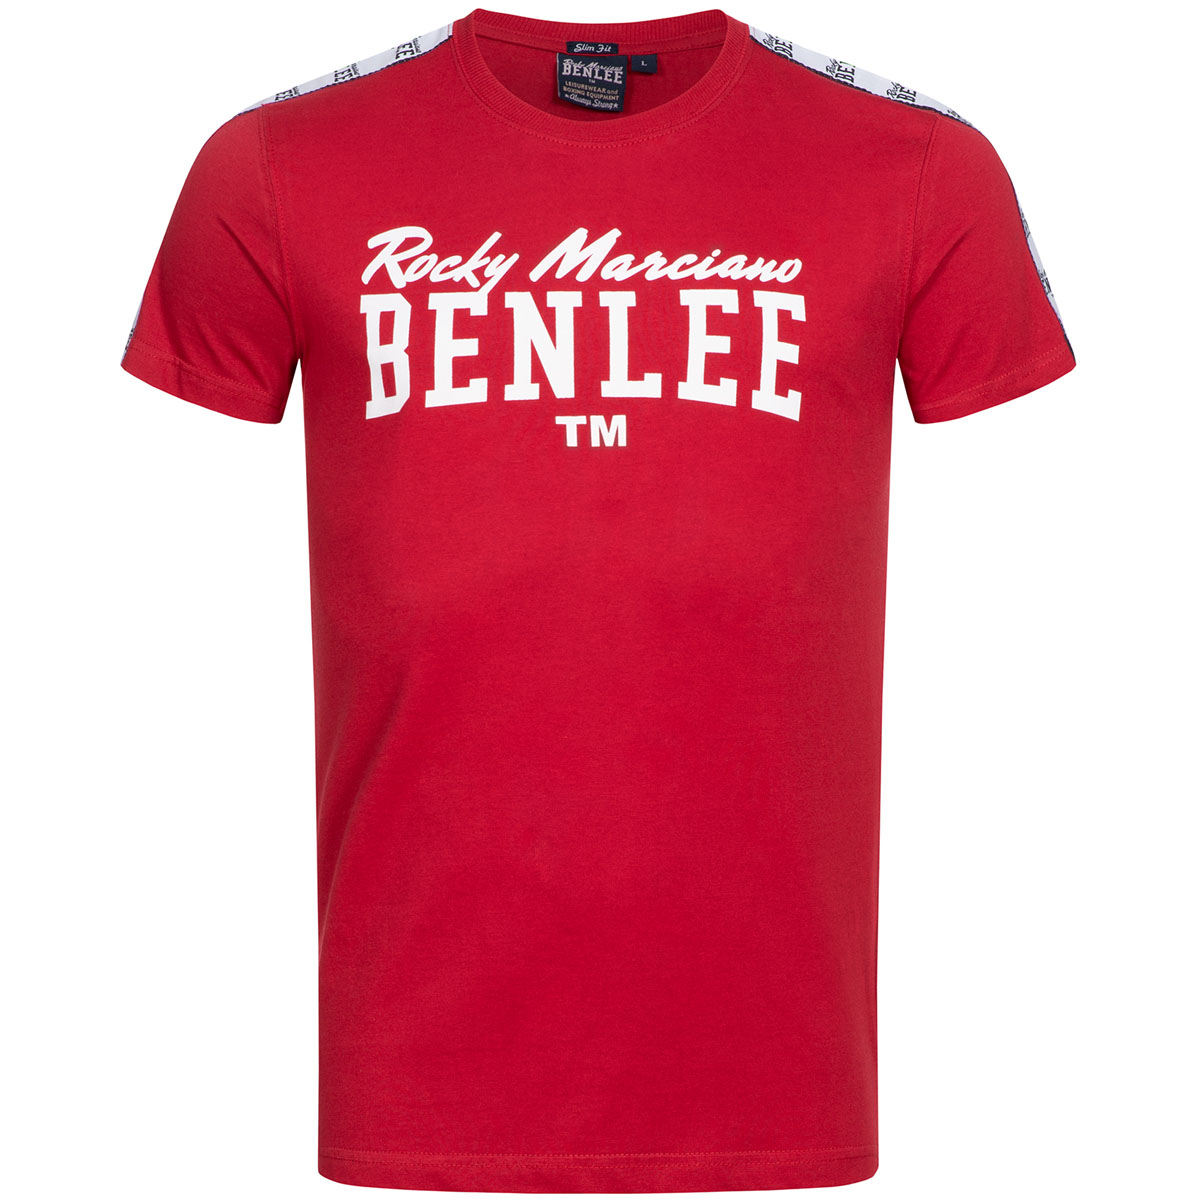 Benlee T-Shirt, Kingsport, red, M